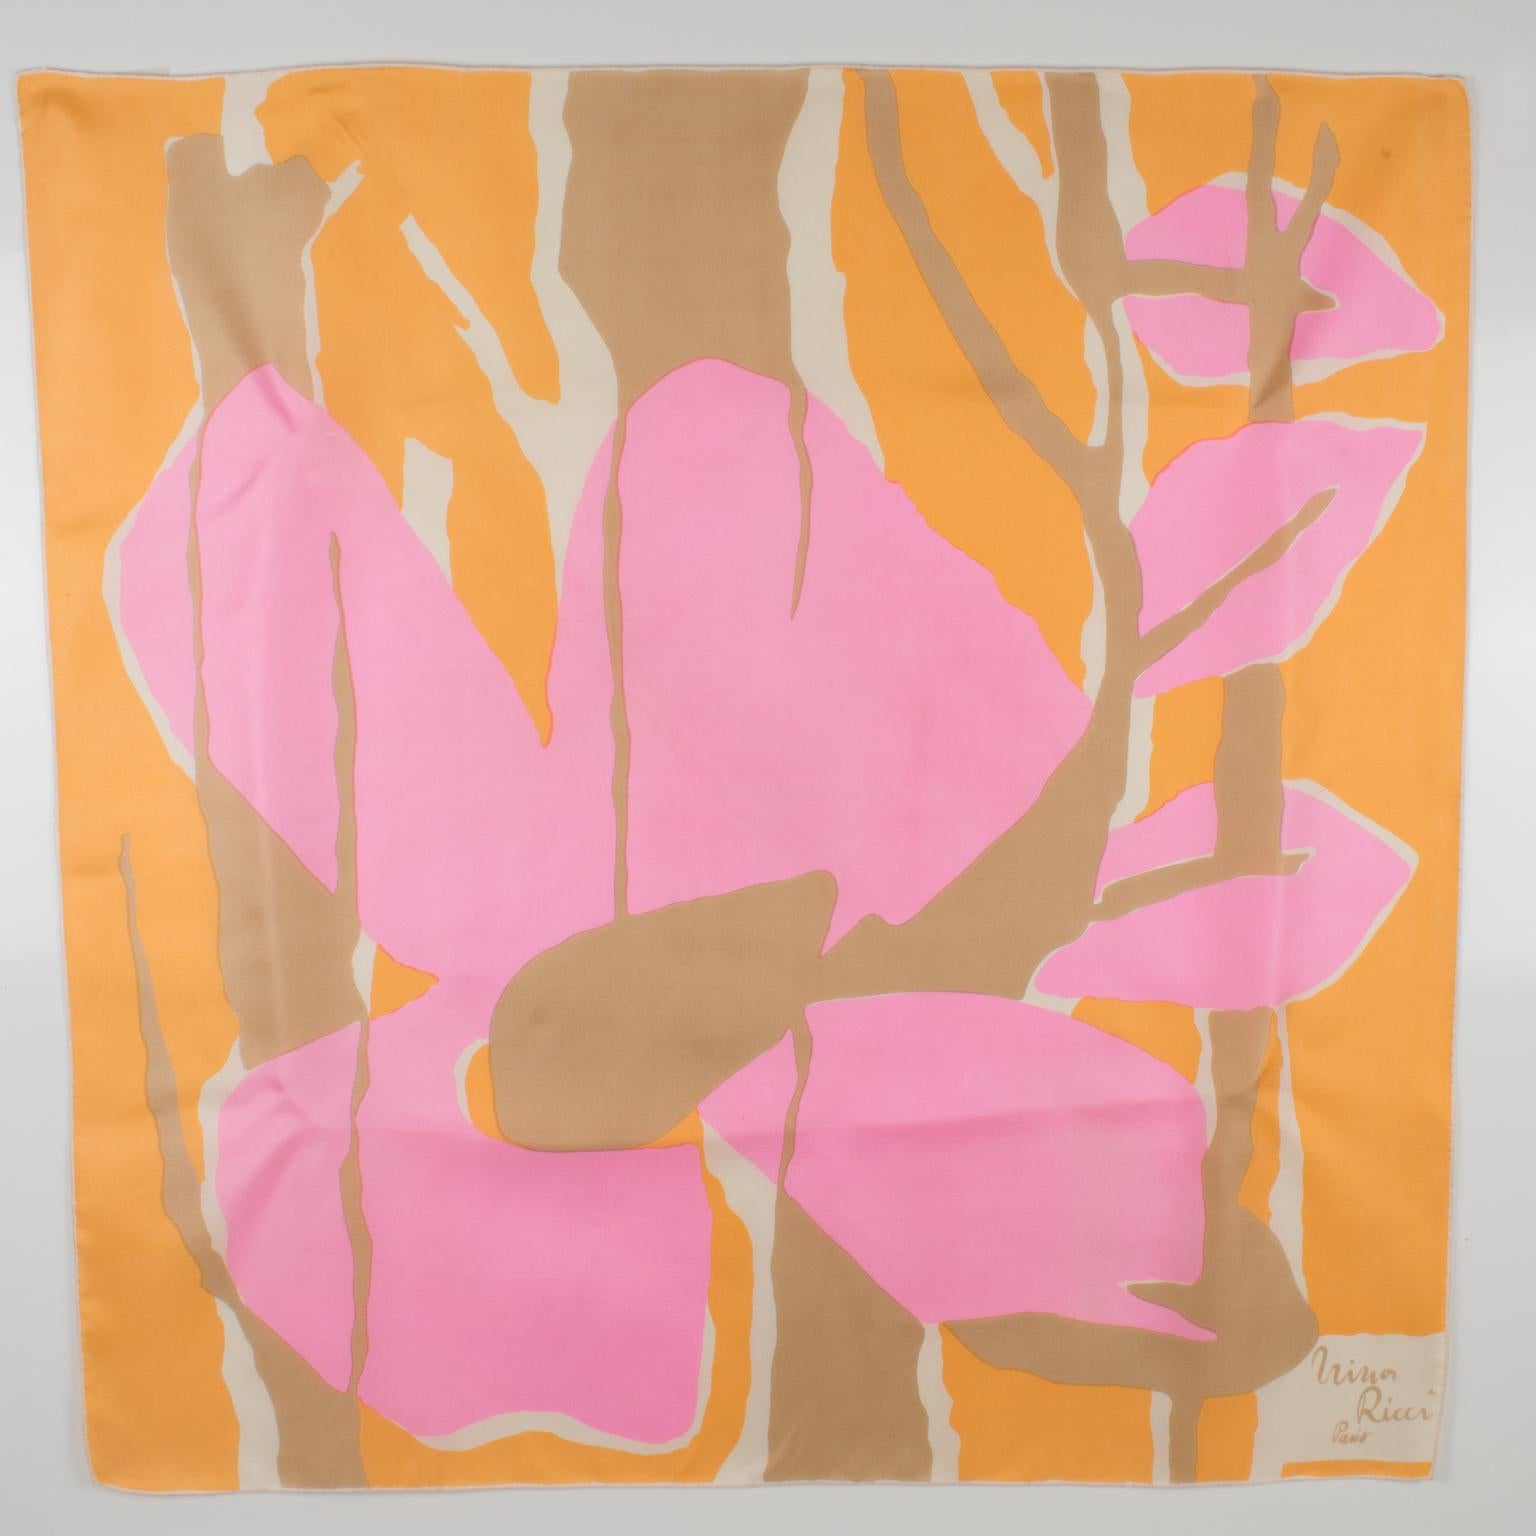 Women's Nina Ricci Paris Silk Scarf Abstract 1970s Print in Pink and Orange